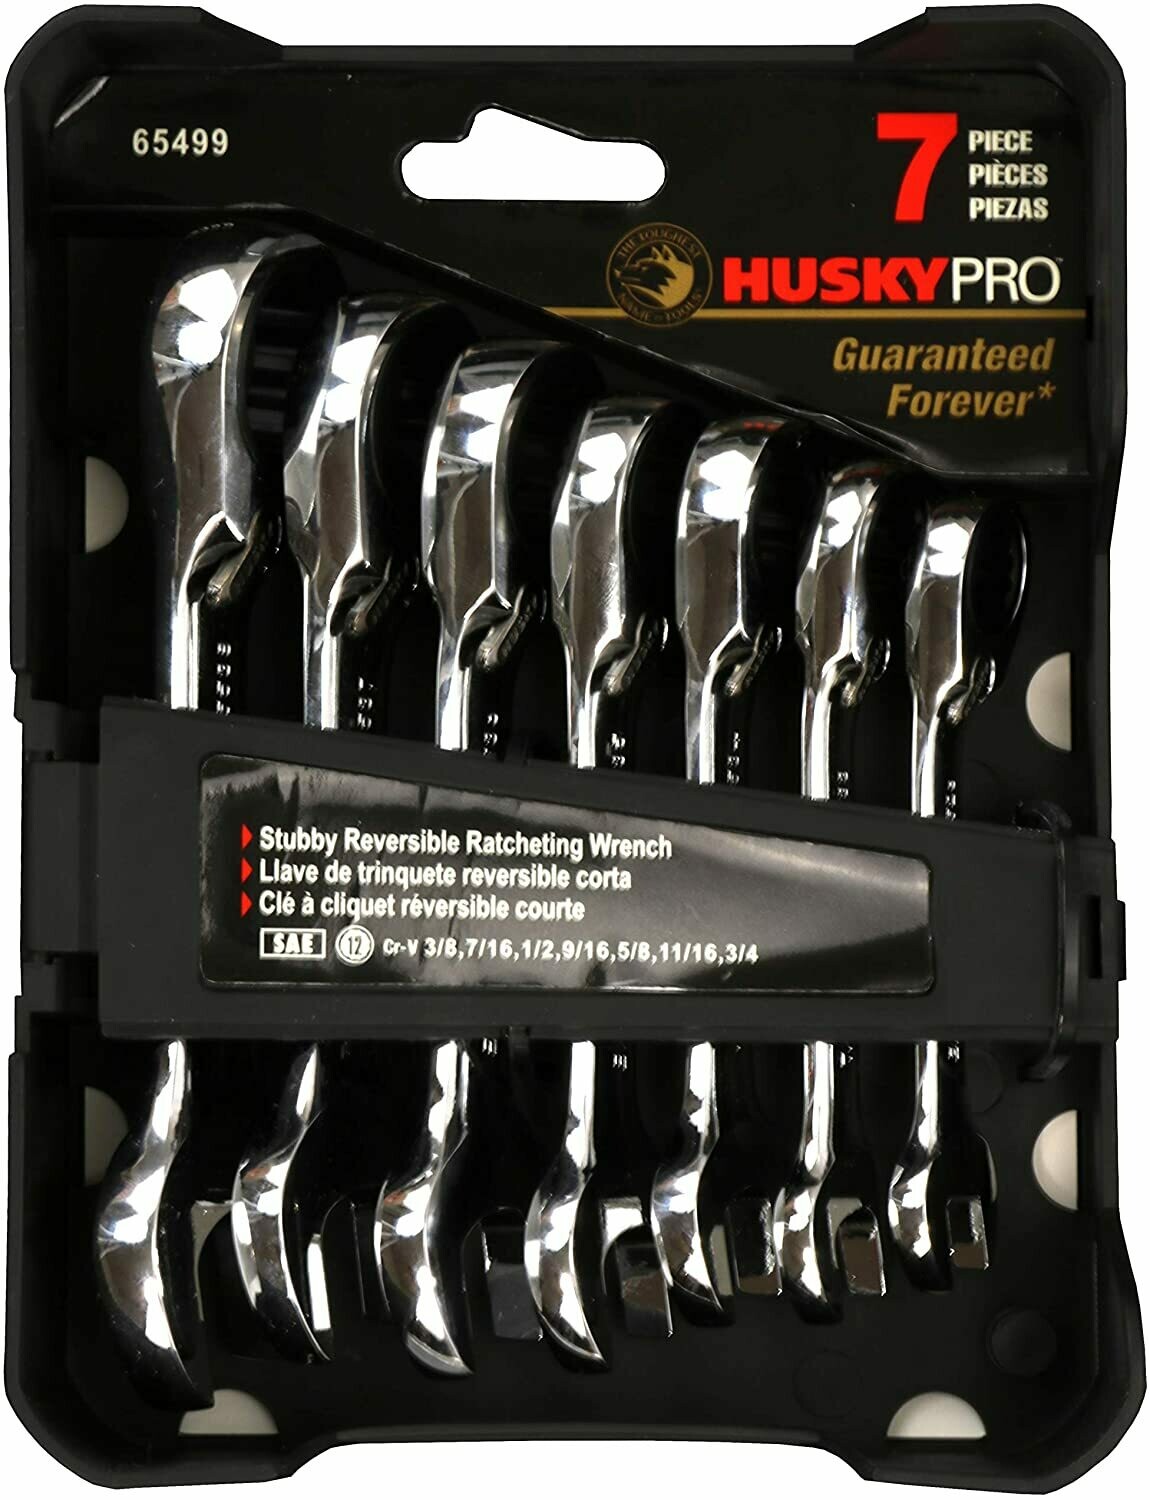 HuskyPro 7 Piece Reversible Ratcheting Wrench Set